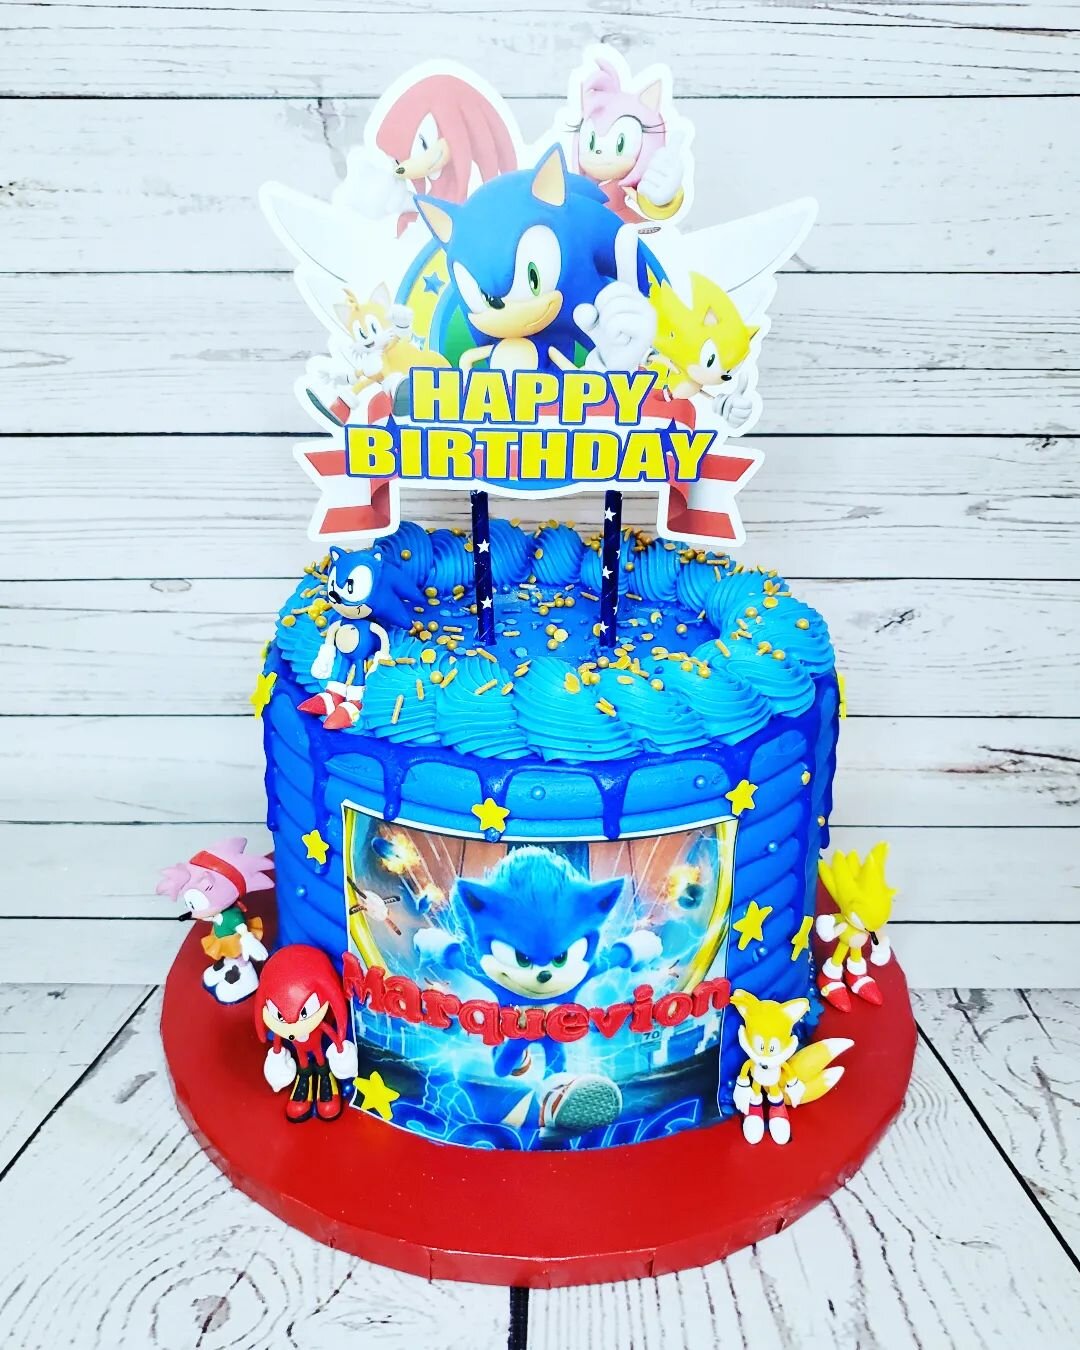 Have a WONDERFUL birthday! #dessertfirst #ieatdessertfirst #dessertfirstlady #michiganbaker #michigancustomcakes #sonicthehedgehogcake #sonicthehedgehogcakes